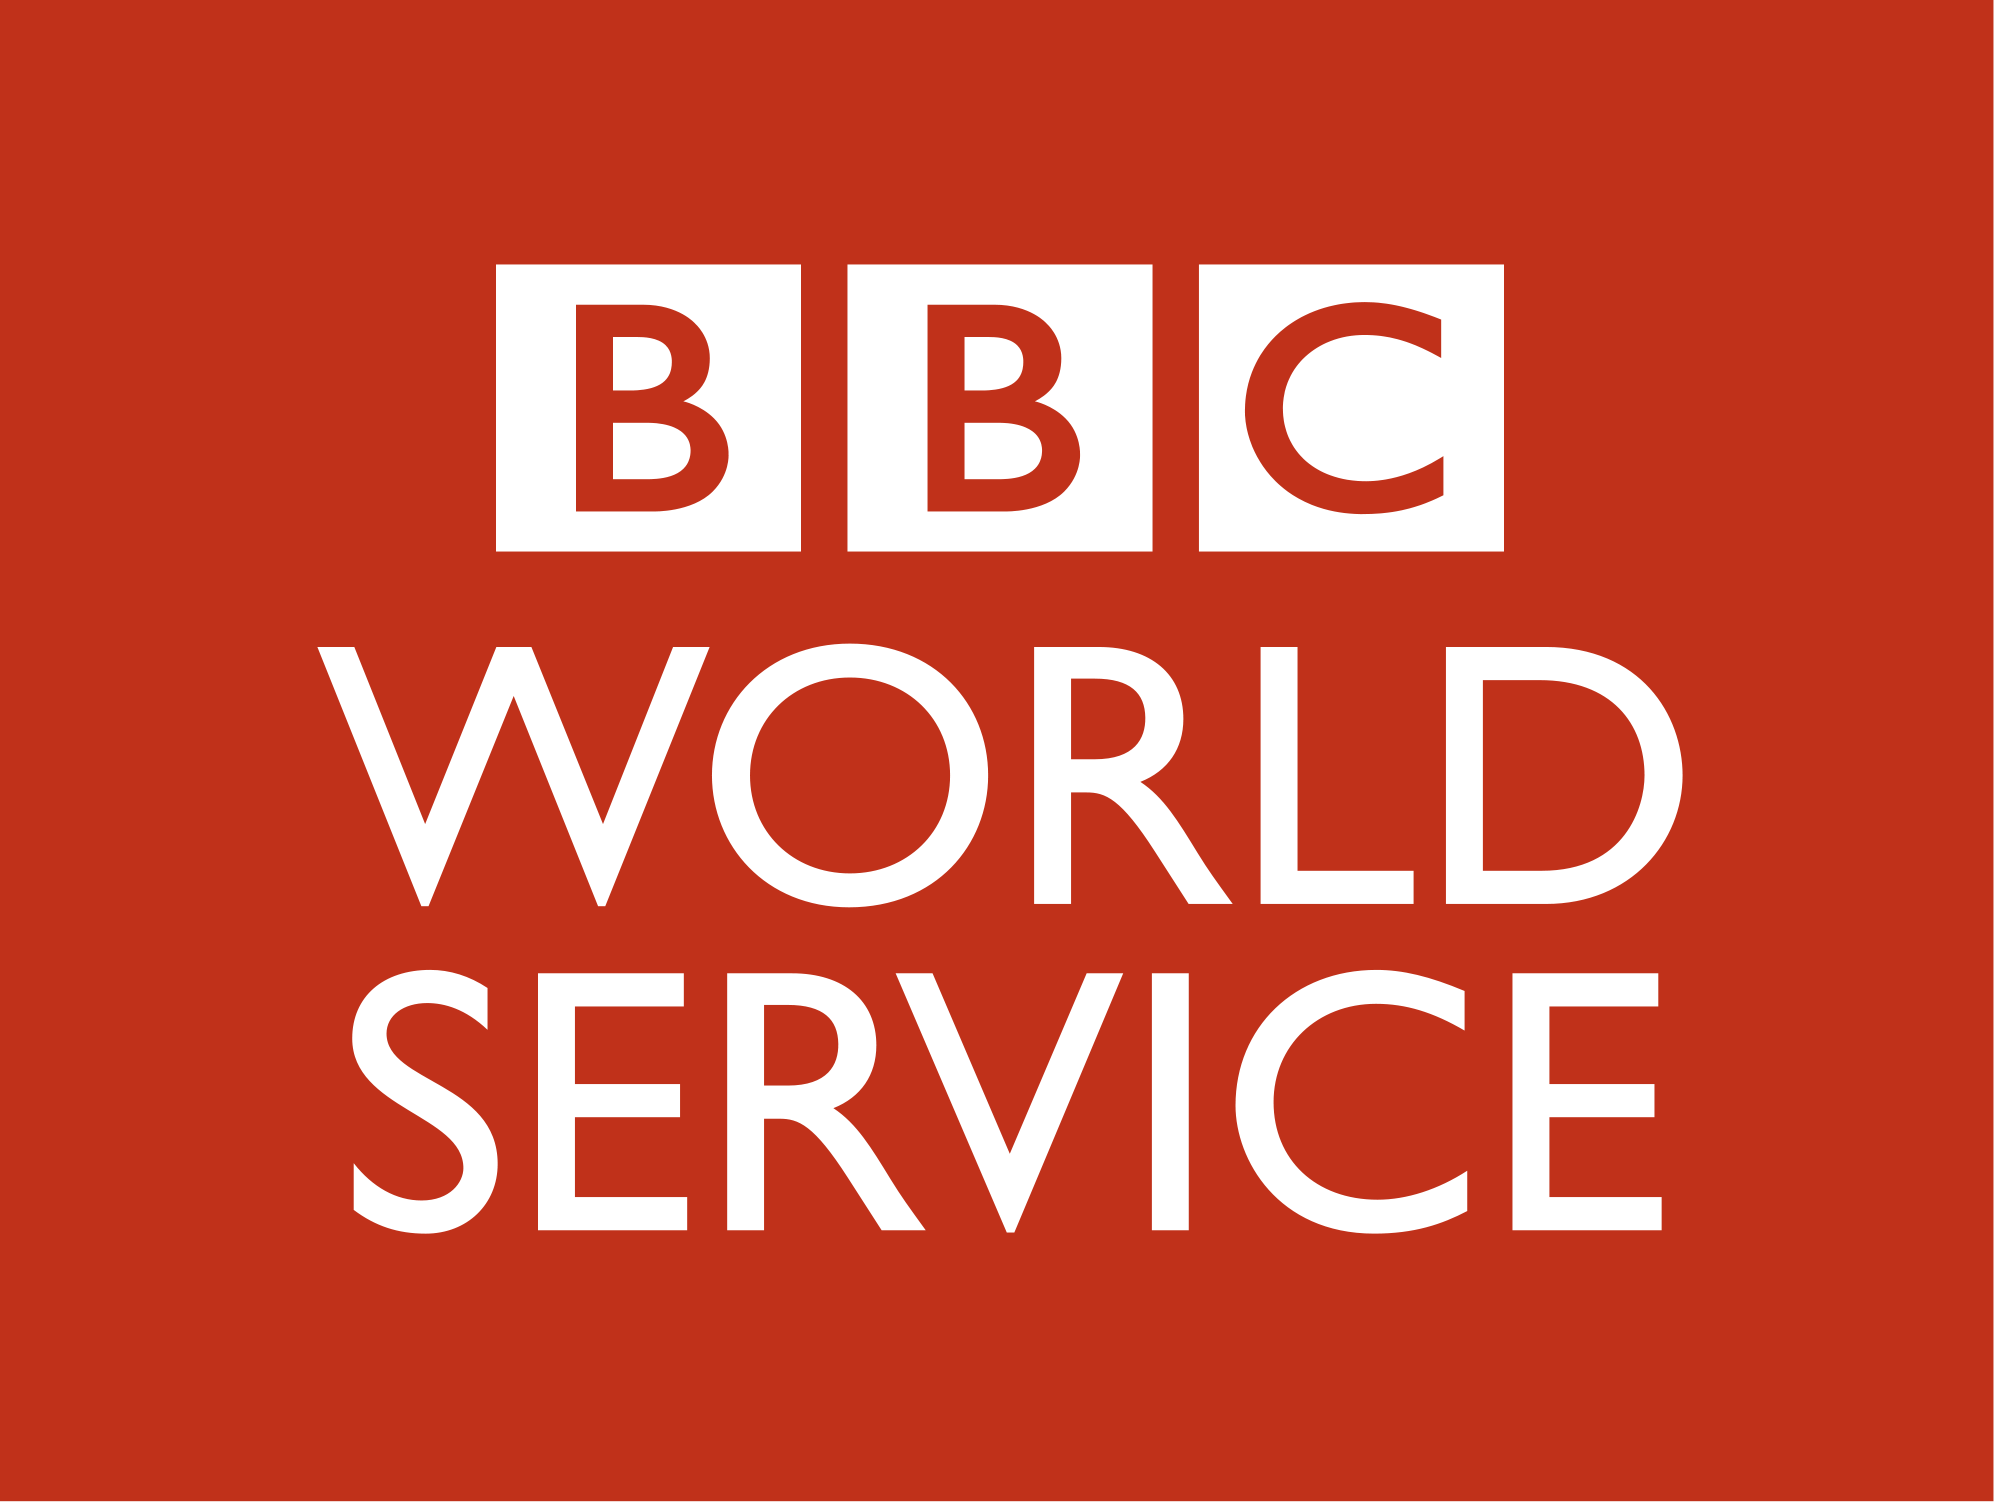 BBC World Service (starts 11:56)